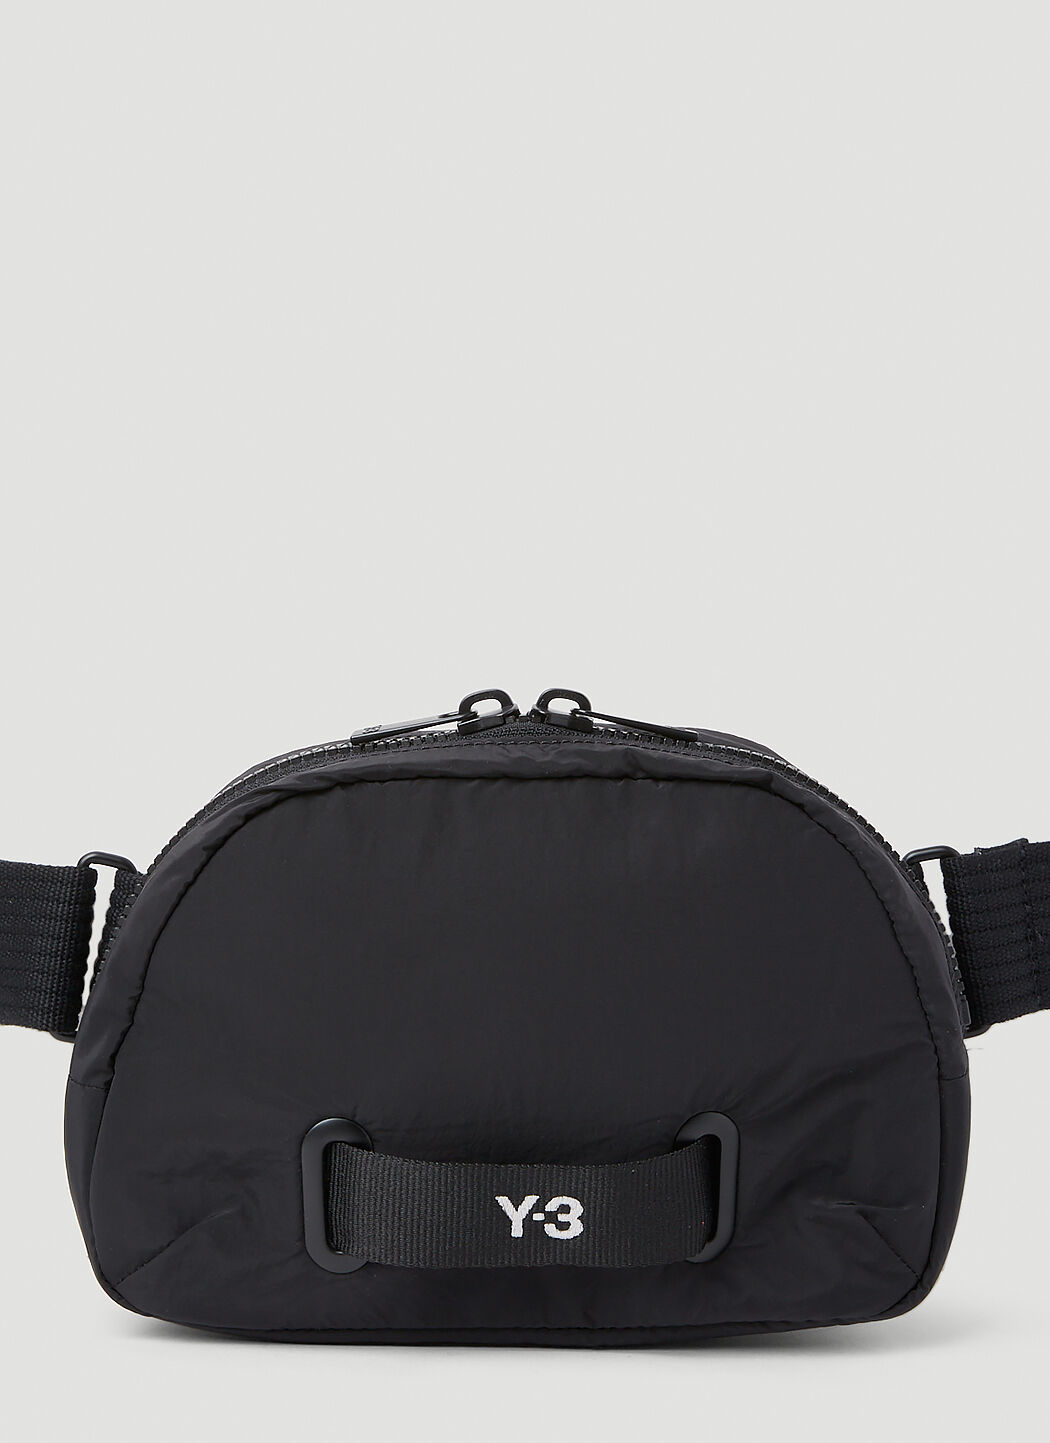 authentic Yves Saint Laurent EASY Y logo bag khaki color patent leather |  eBay